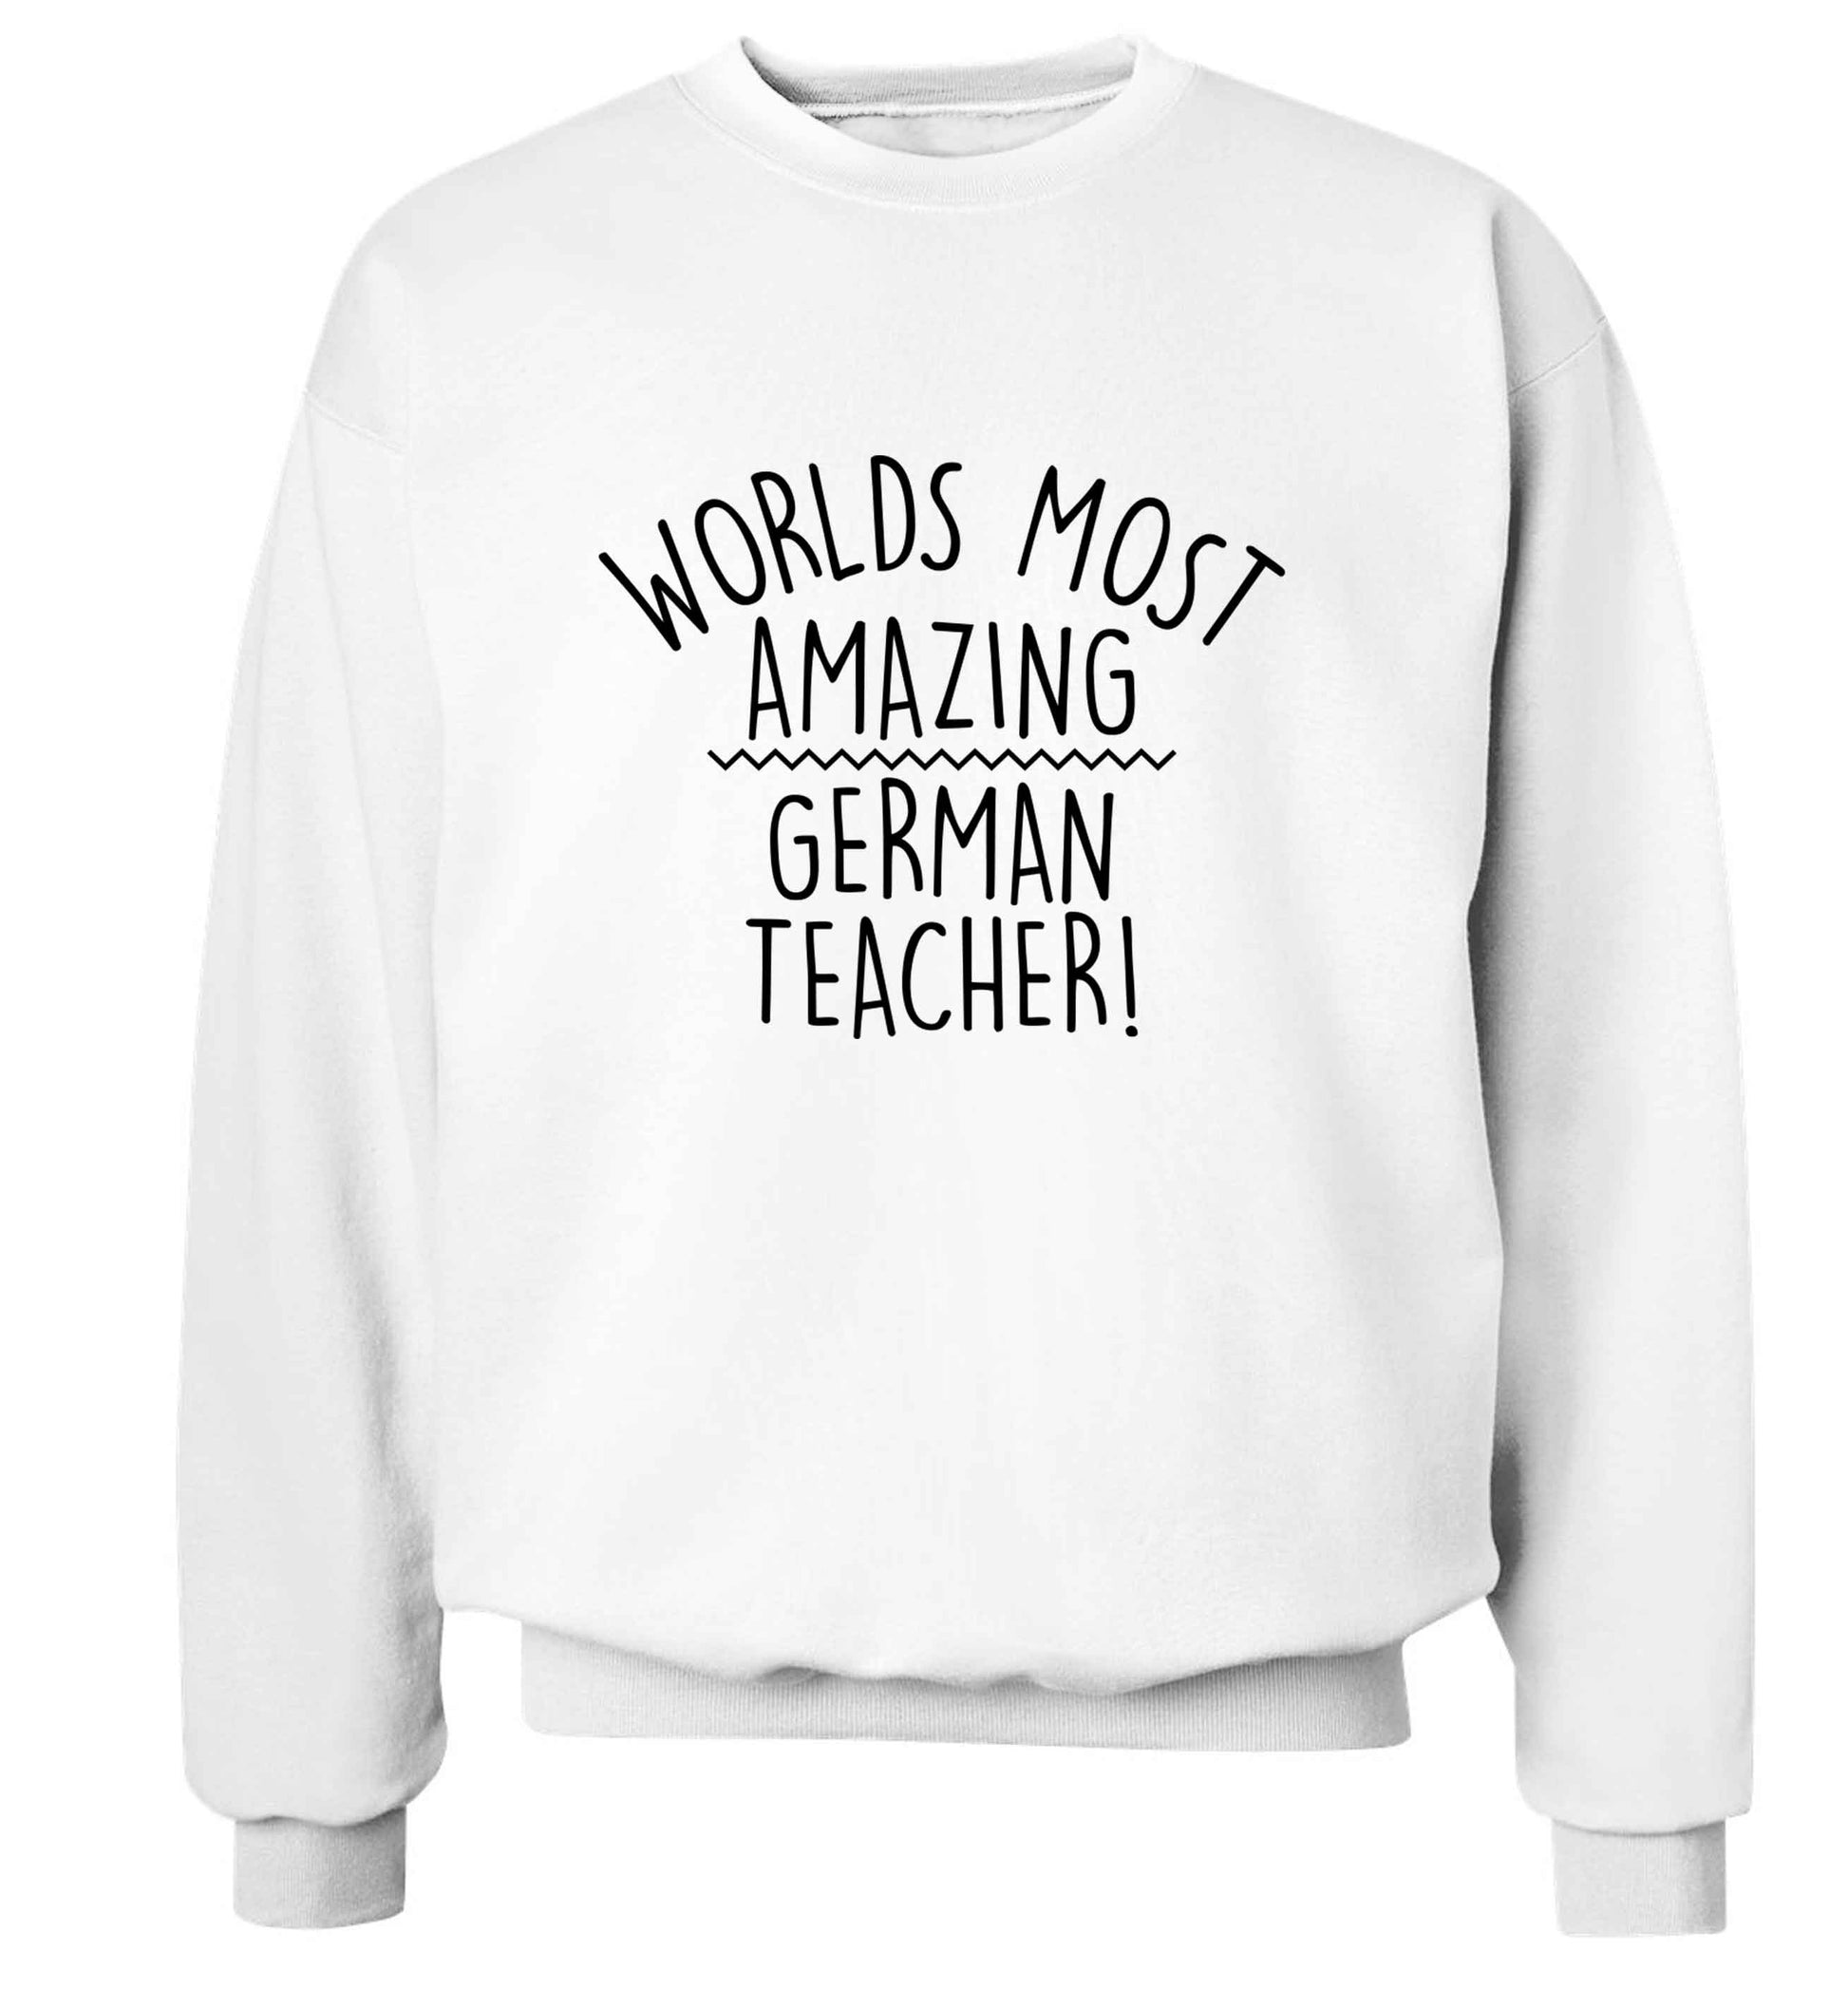 Worlds most amazing German teacher adult's unisex white sweater 2XL